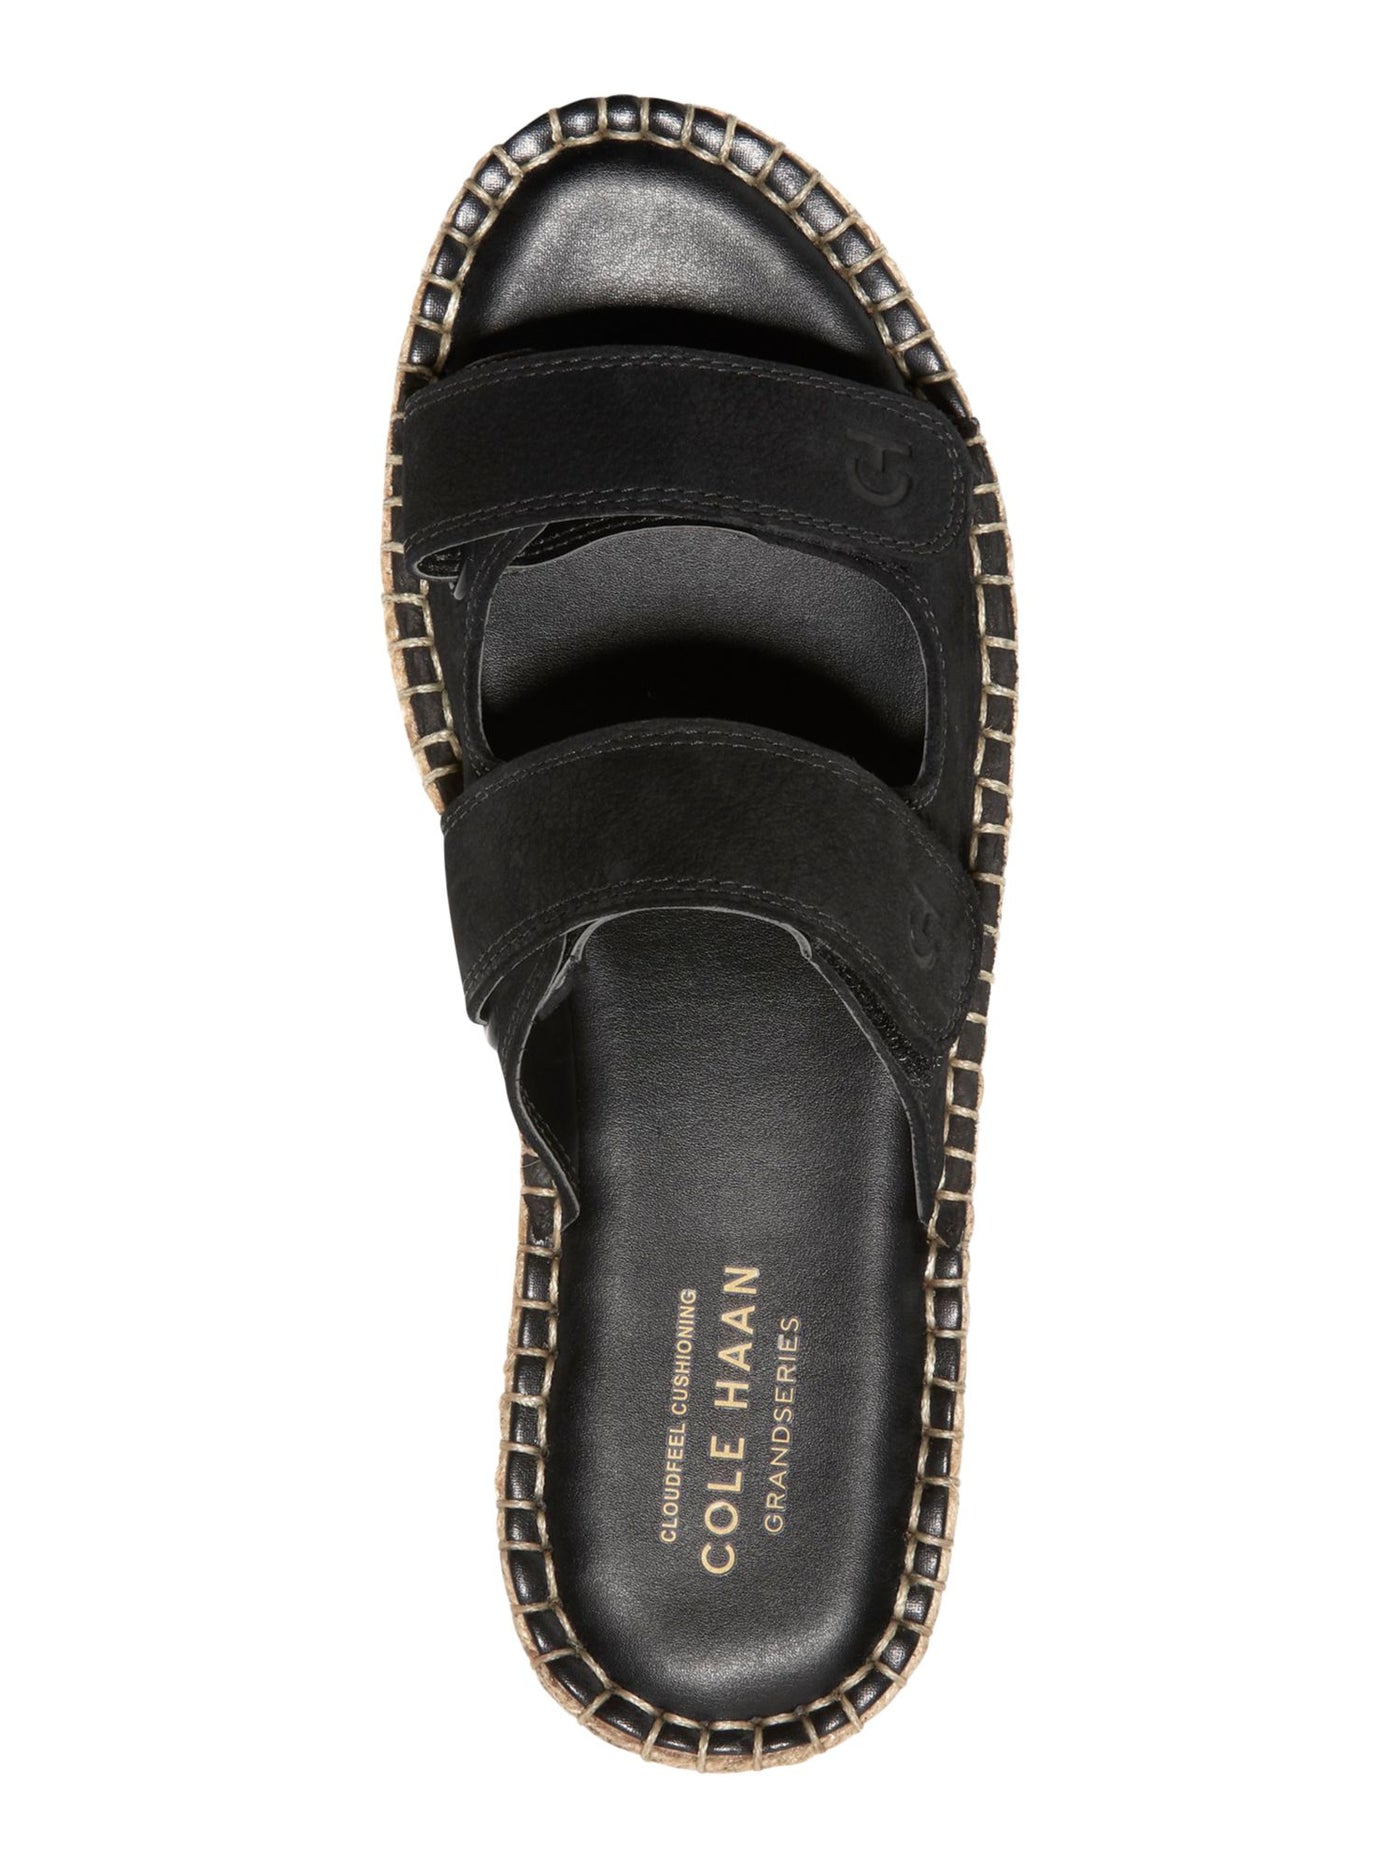 COLE HAAN GRANDSERIES Womens Black Adjustable Cushioned Cloudfeel Round Toe Platform Slip On Espadrille Shoes 8 B